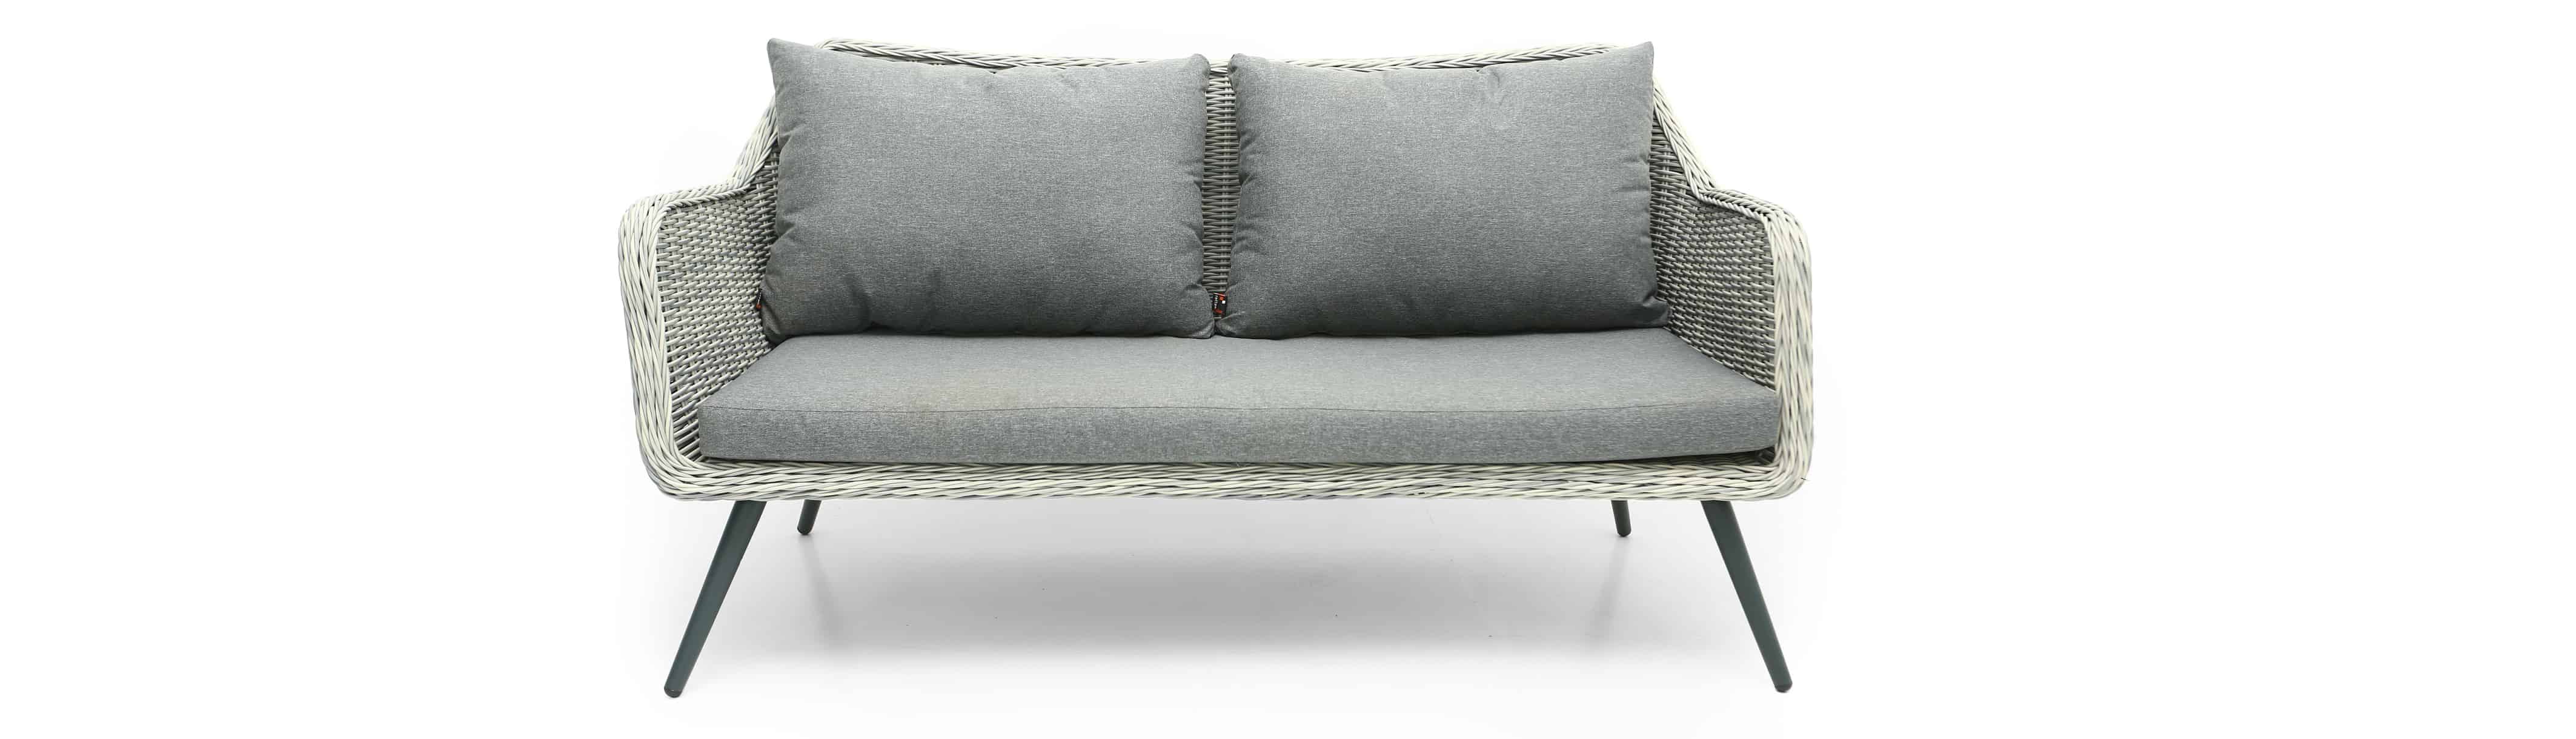 Malaga Rattan Furniture Range | Outdoor Sofa Set